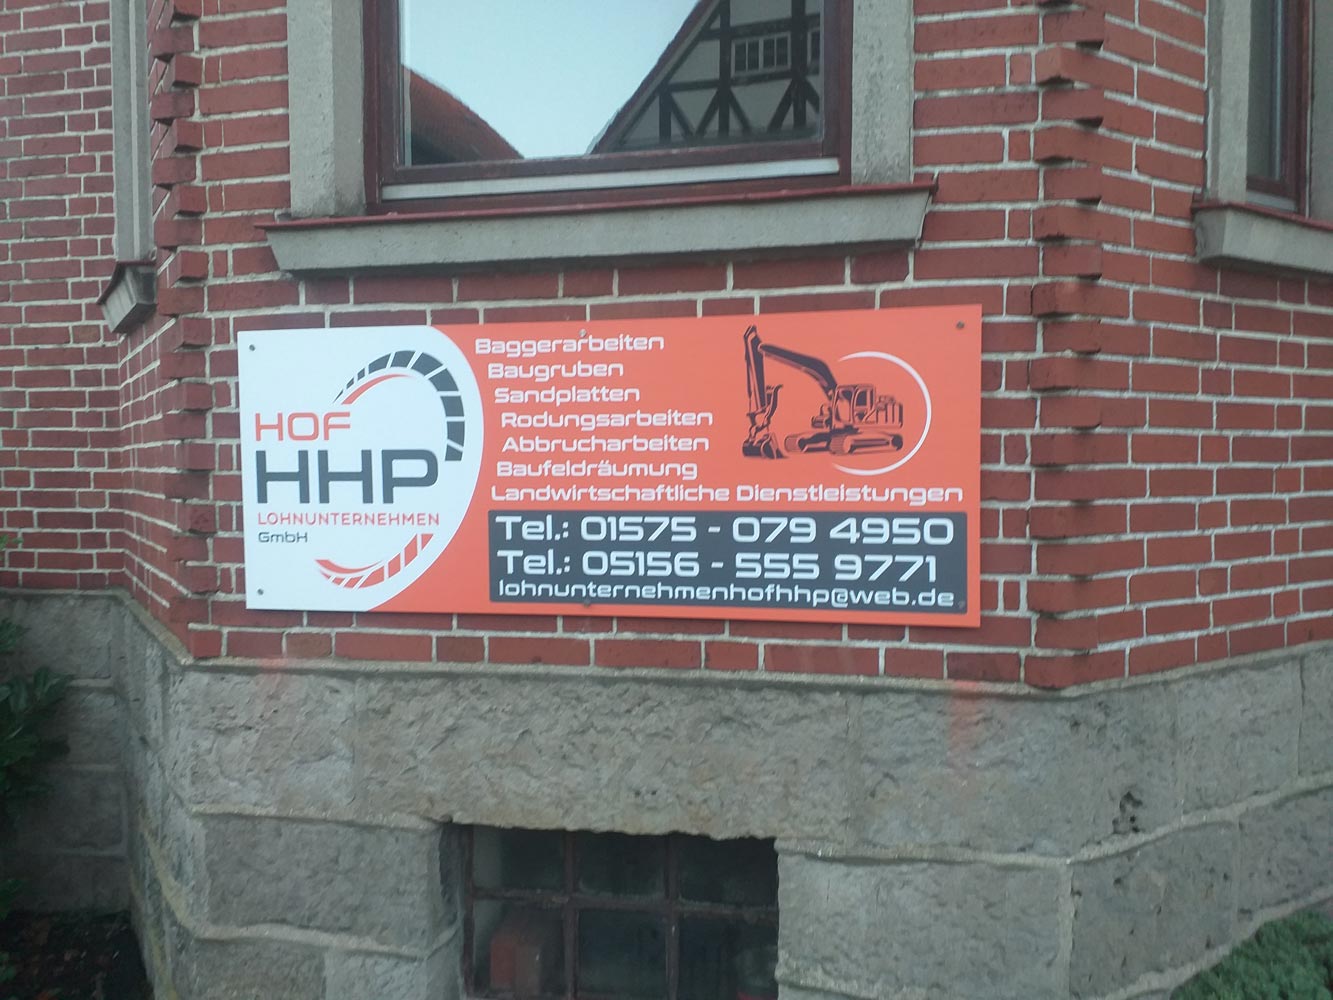 Bild 1 Hof HHP Lohnunternehmen GmbH in Coppenbrügge